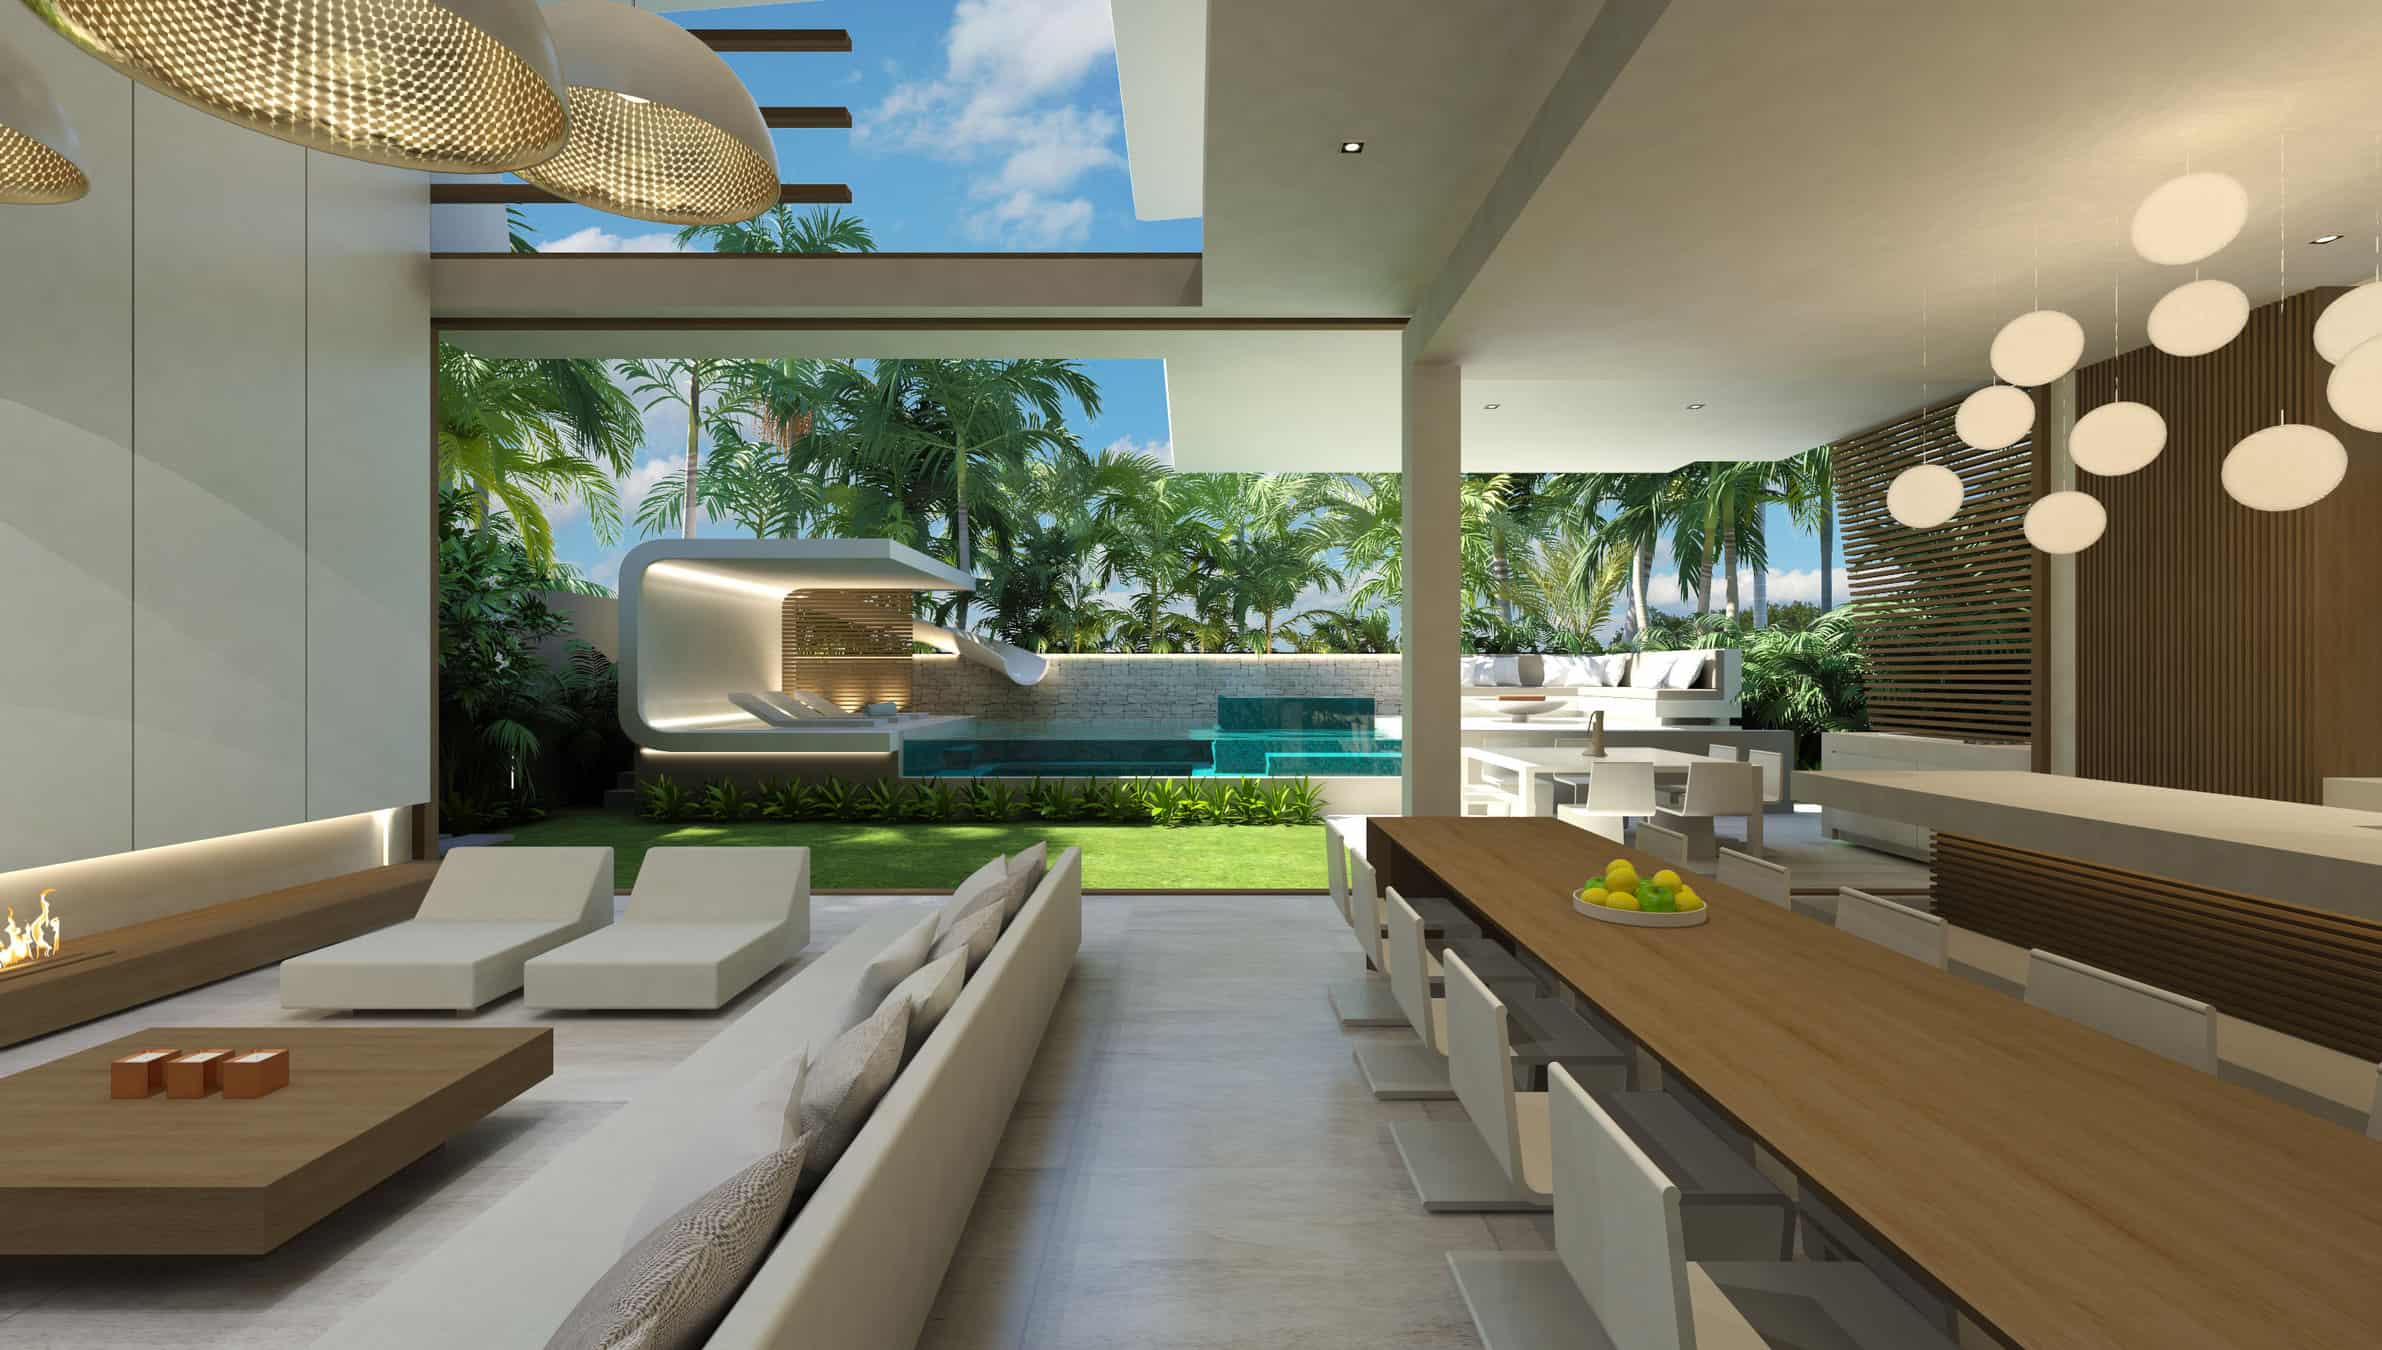 MODERN BEACH HOUSE – Chris Clout Design